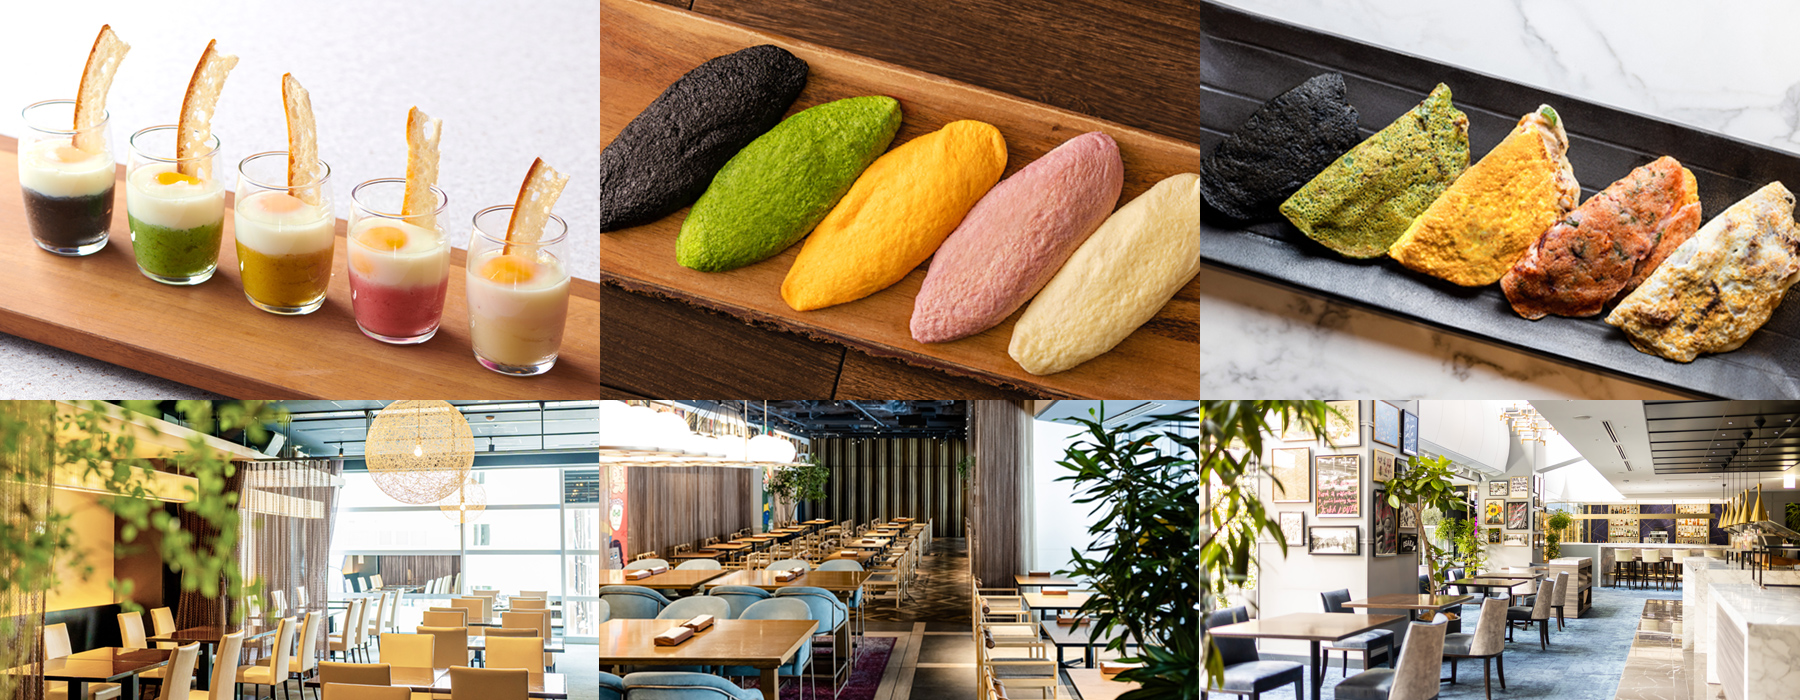 CROSS HOTELでクロスホテル京都開業5周年をお祝い 朝食ビュッフェで「ファイブ カラーズ メニュー」提供